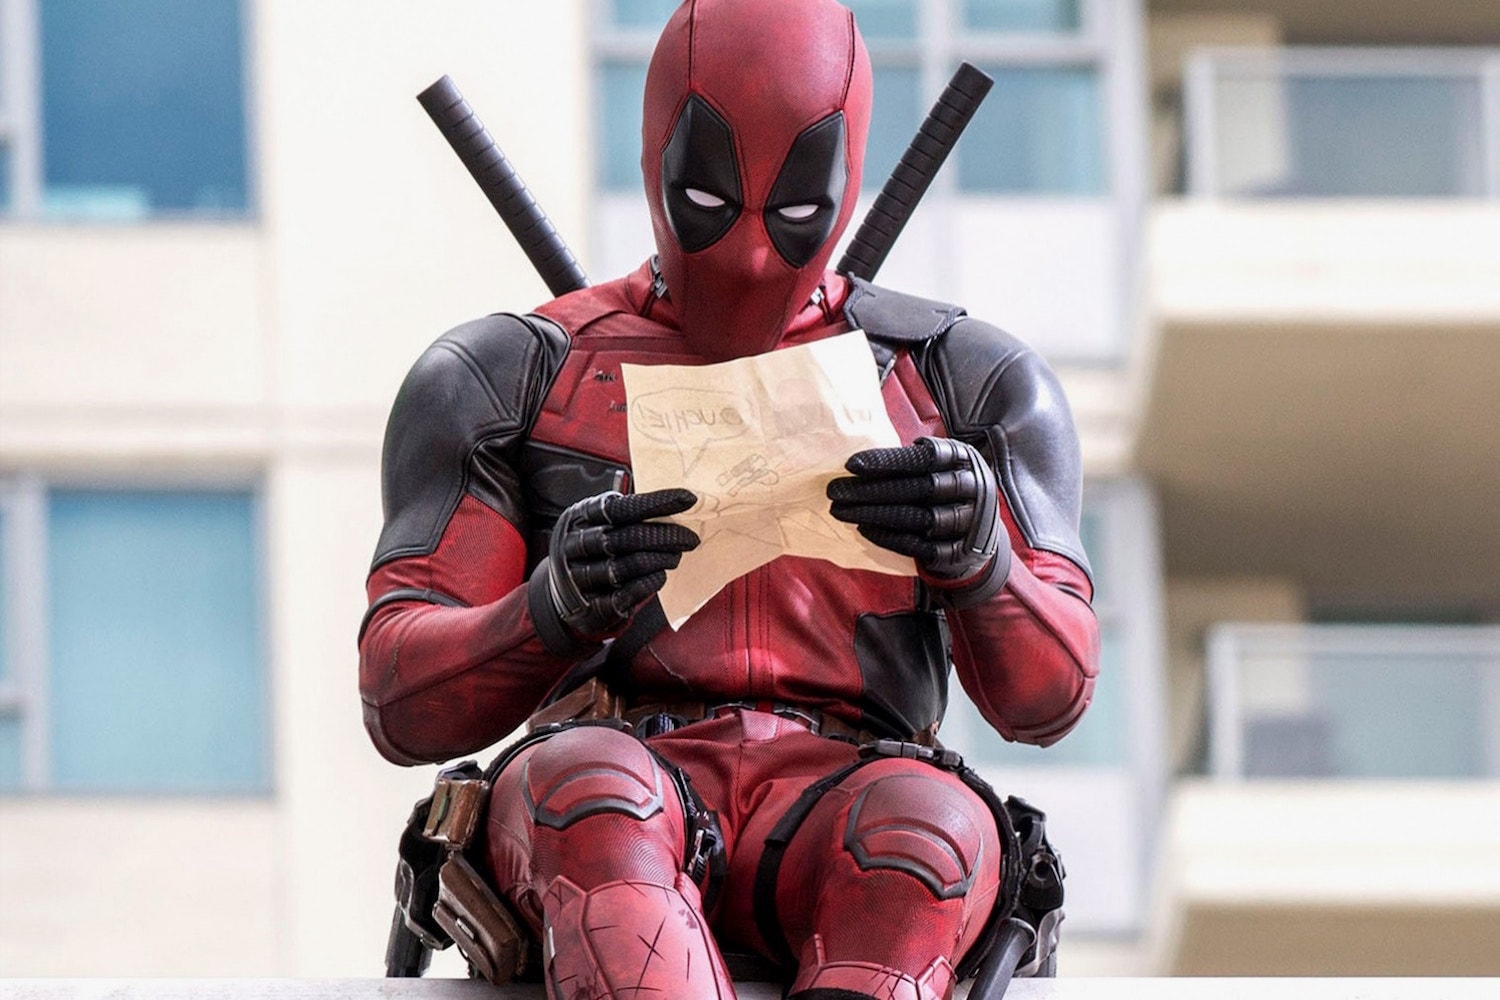 《Deadpool》成為 2016 年英國接獲最多投訴的電影